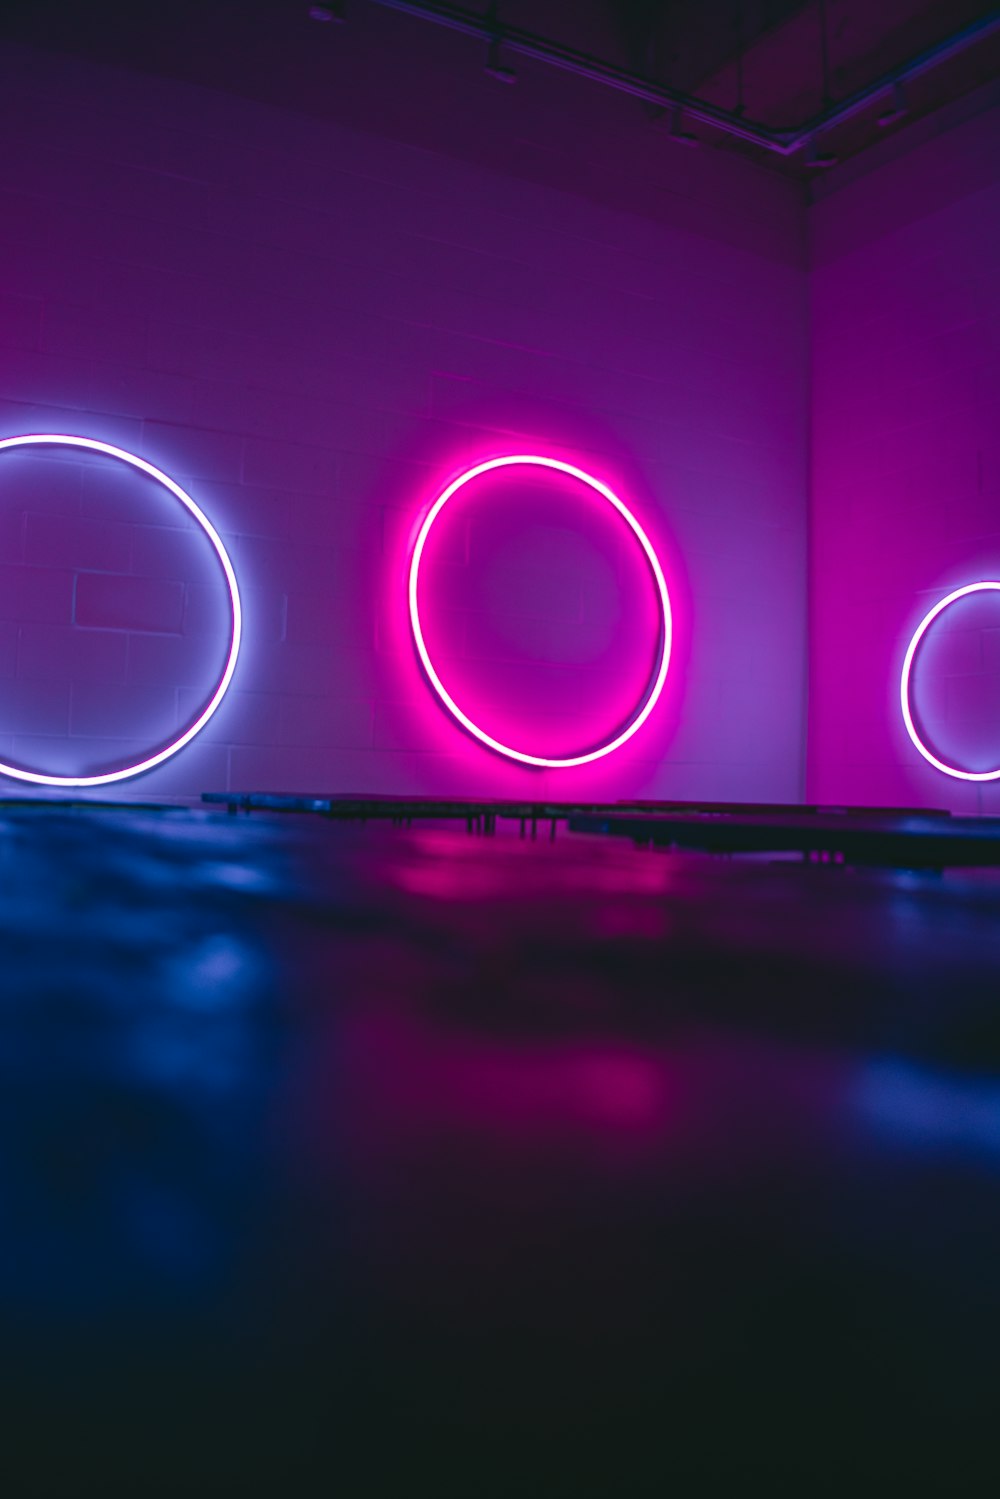 purple and pink light digital wallpaper photo – Free Neon Image on Unsplash